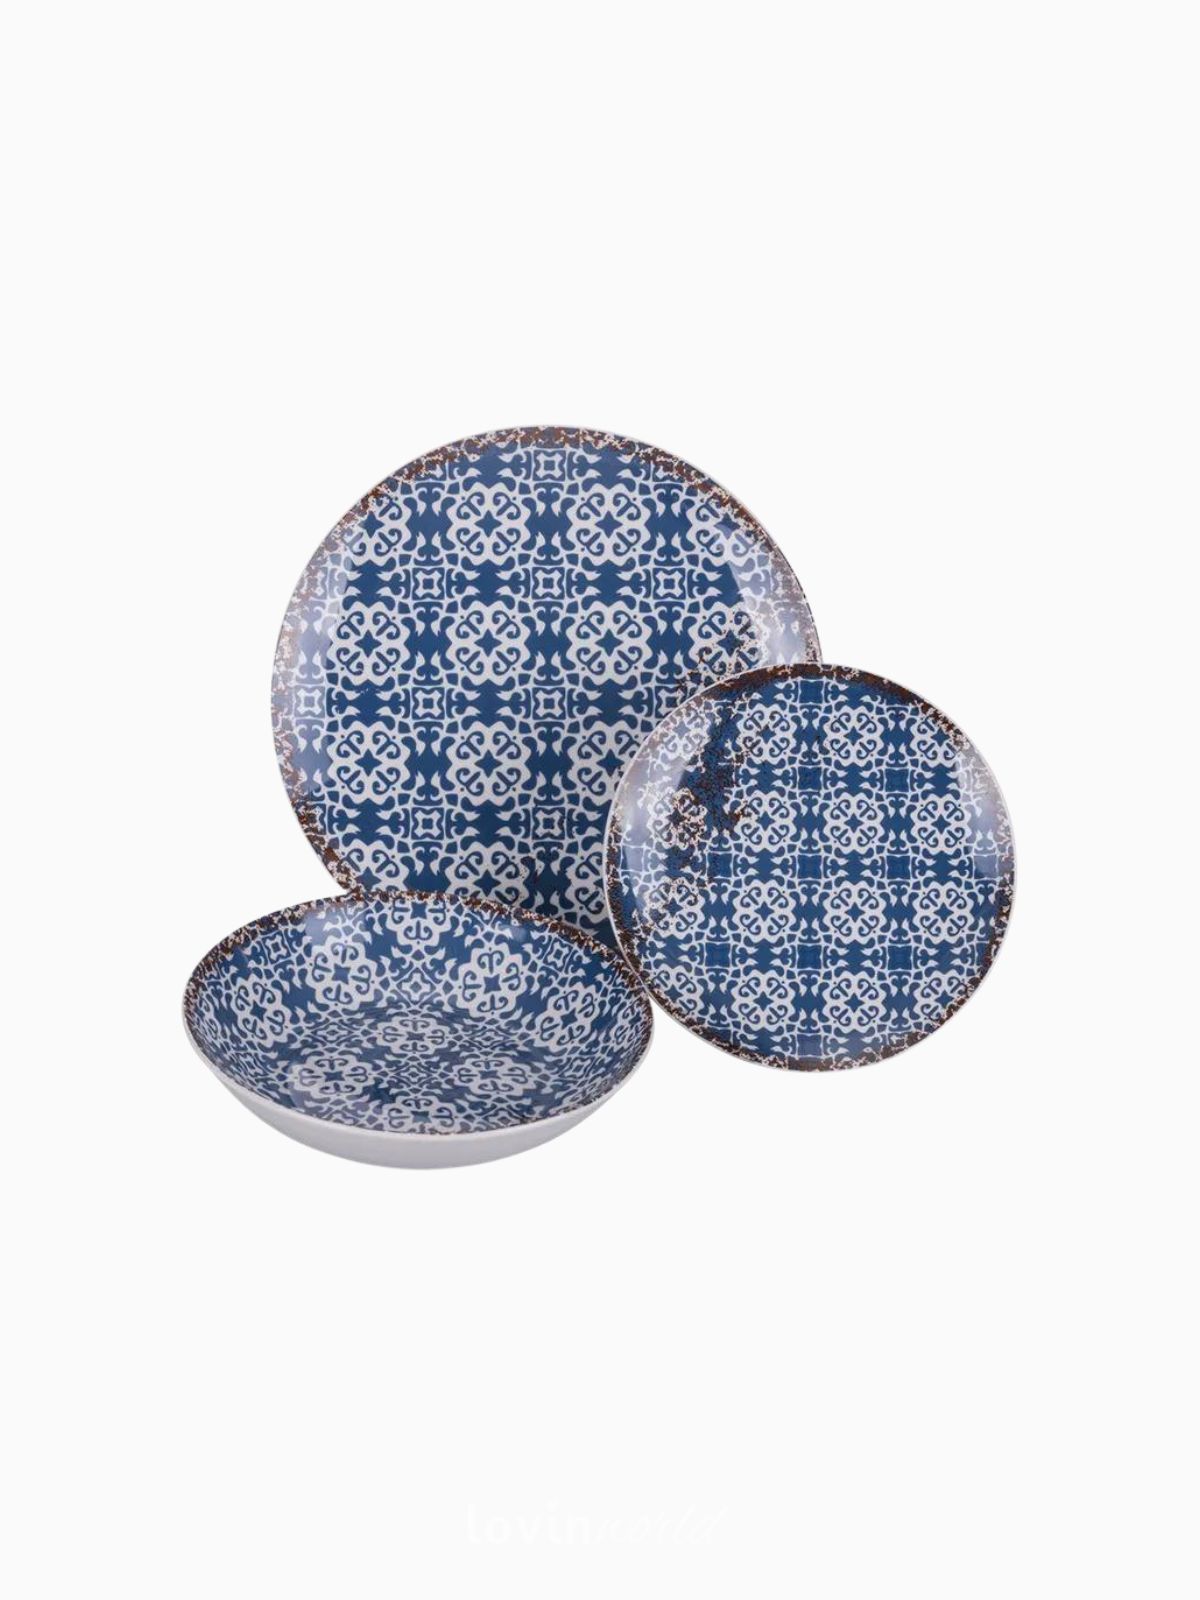 Servizio piatti 18 pz. Kasbah in porcellana, colore blu-5